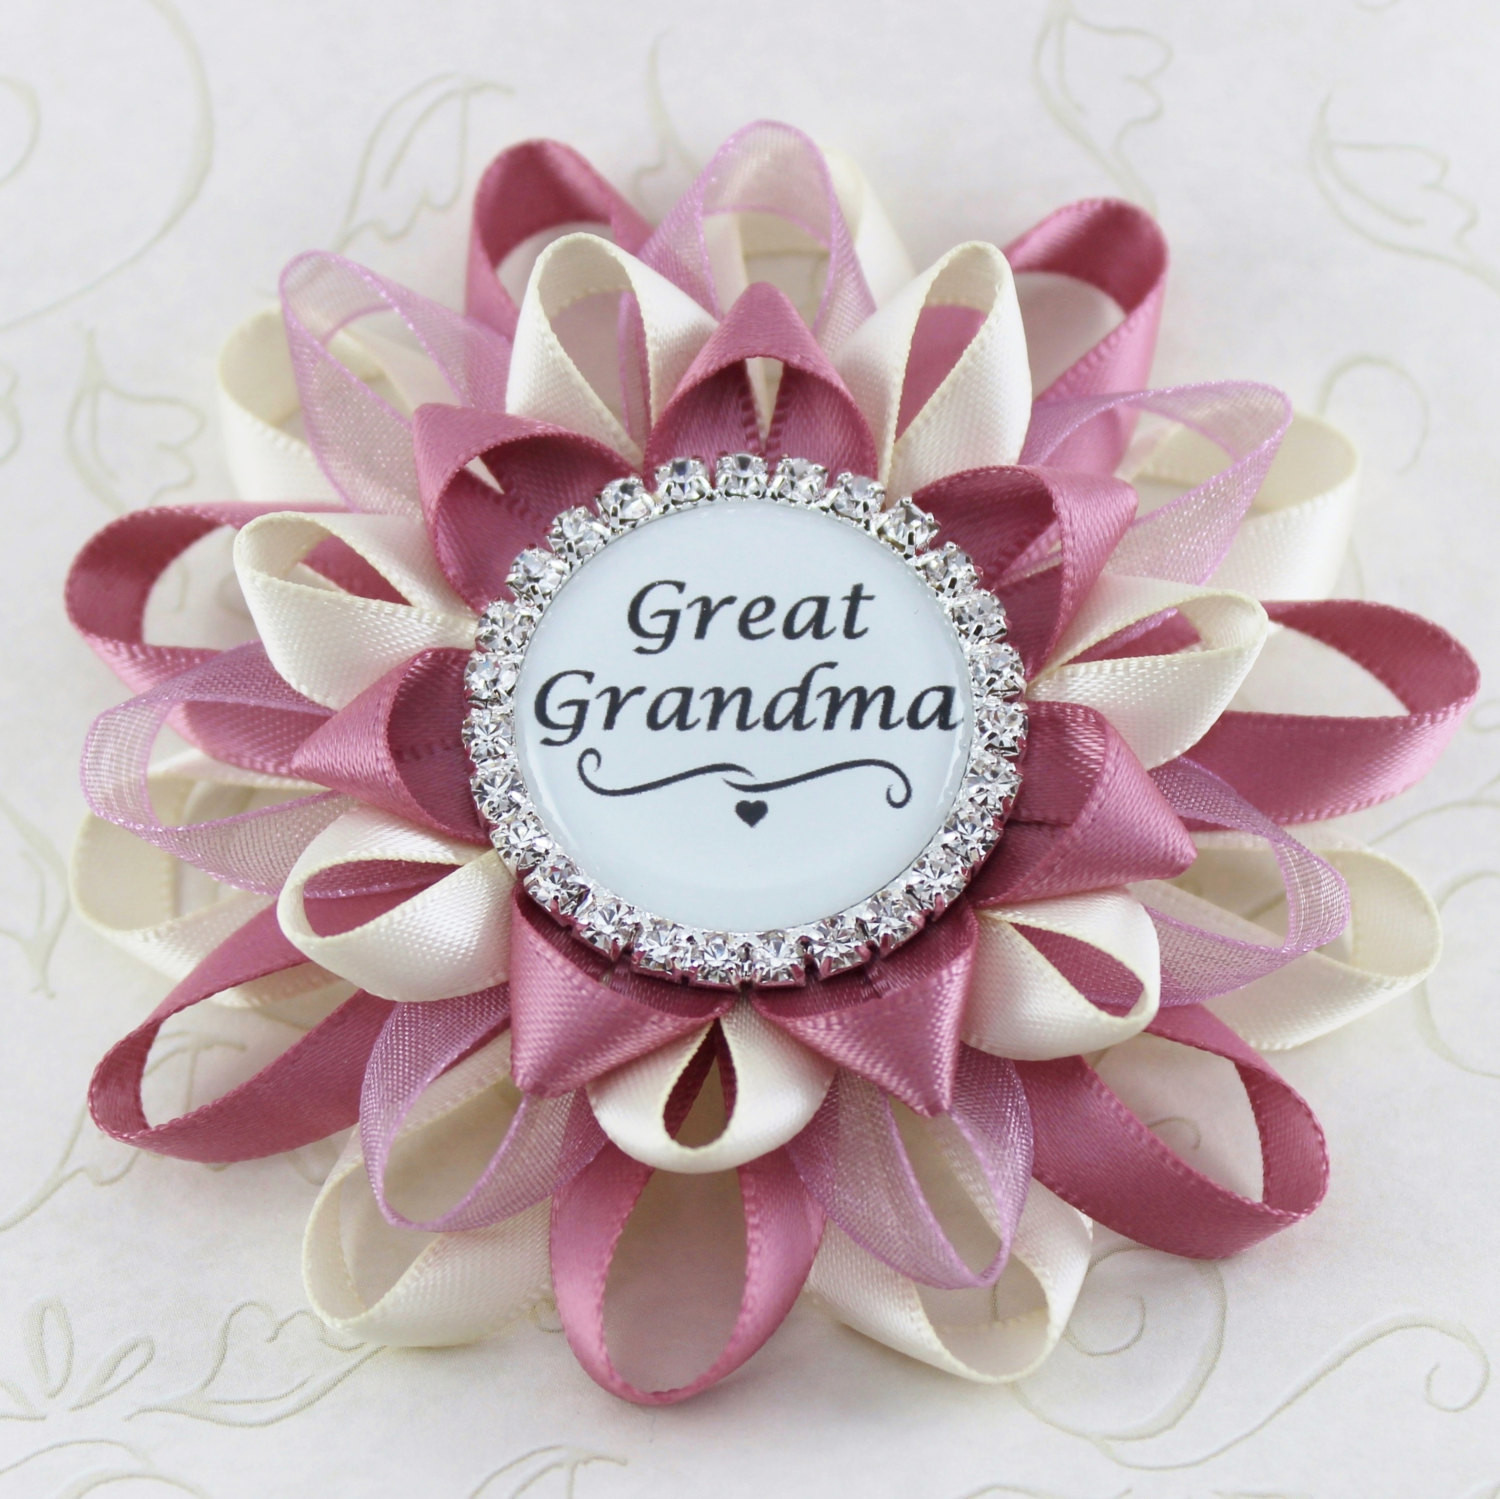 Grandmother Gifts From Baby
 Great Grandma Pin Grandma Gift Gifts for Grandma New